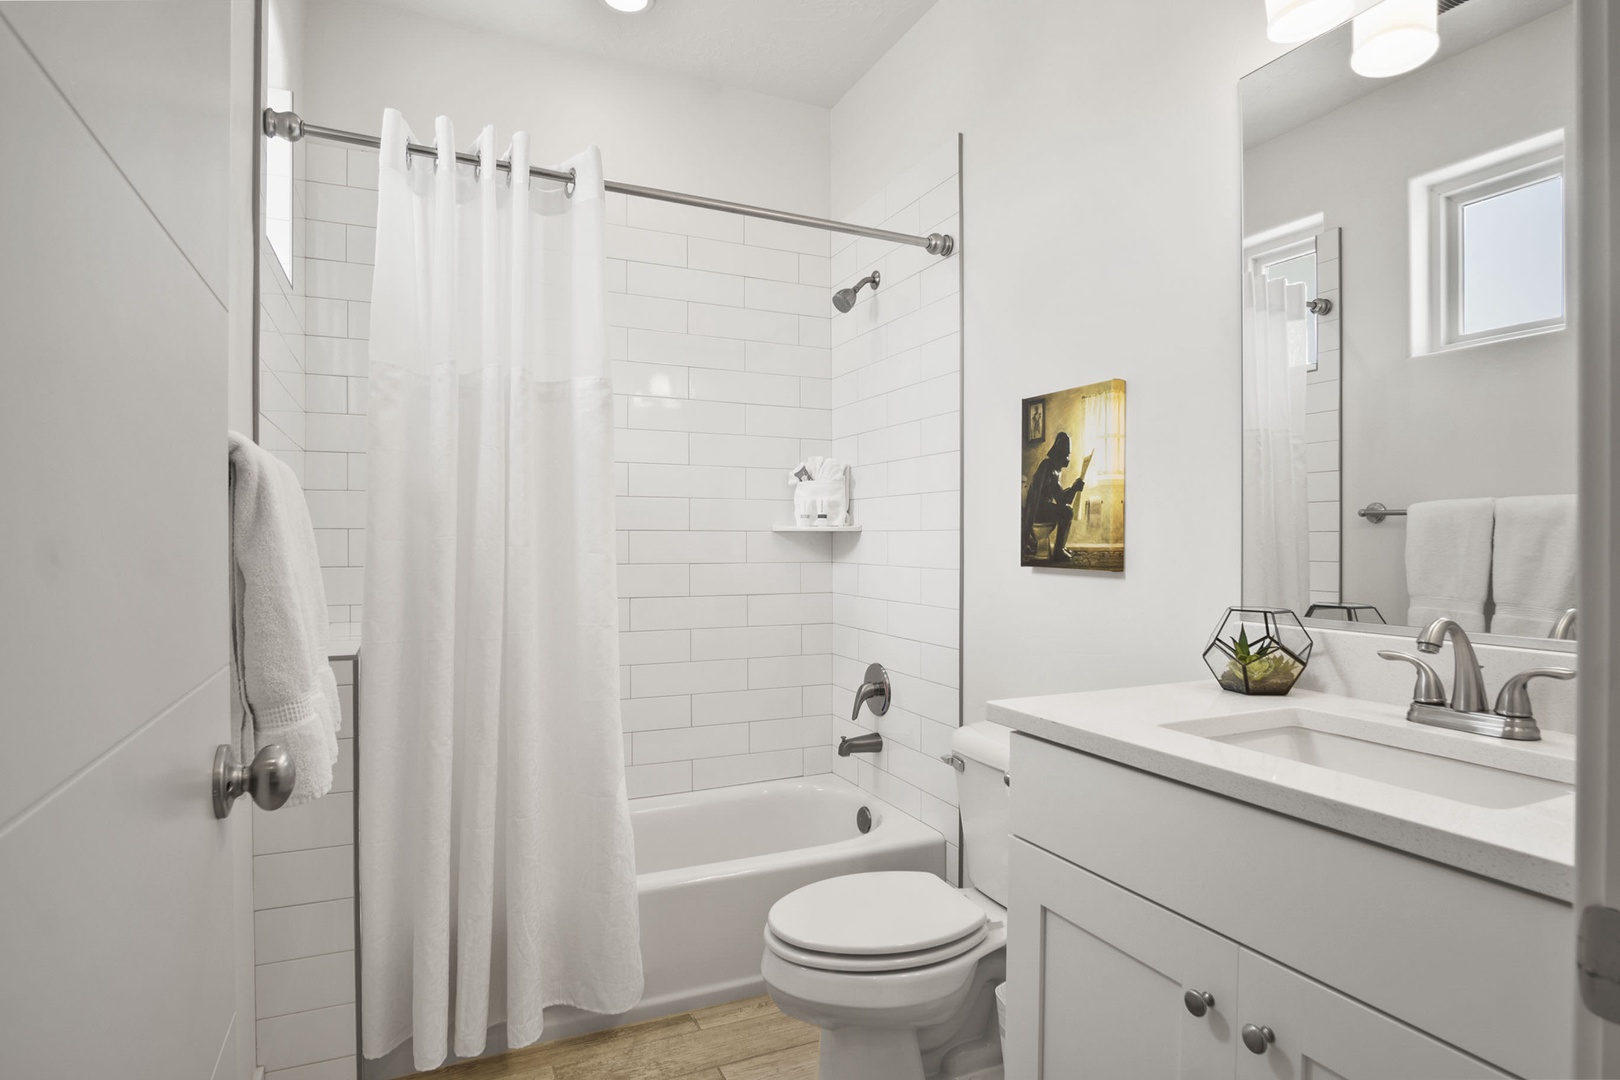 2nd floor en suite (to Bedroom 3), offering a single vanity and shower/tub combo